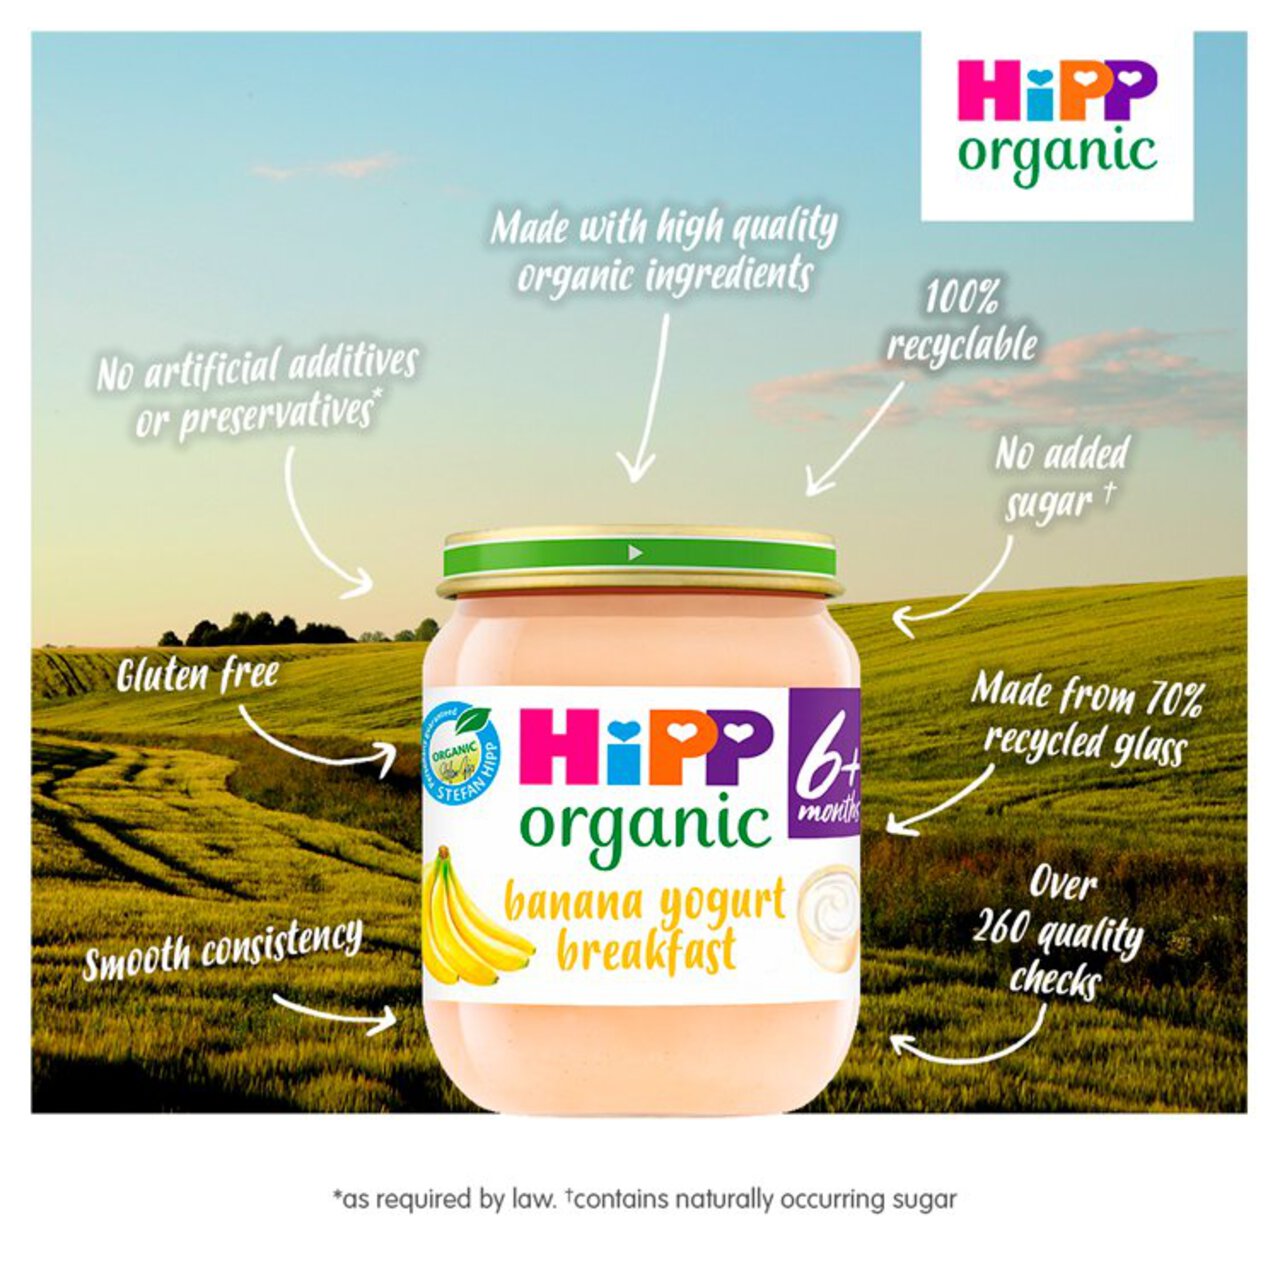 HiPP Organic Banana Yogurt Breakfast Baby Food Jar 6+ Months 125g